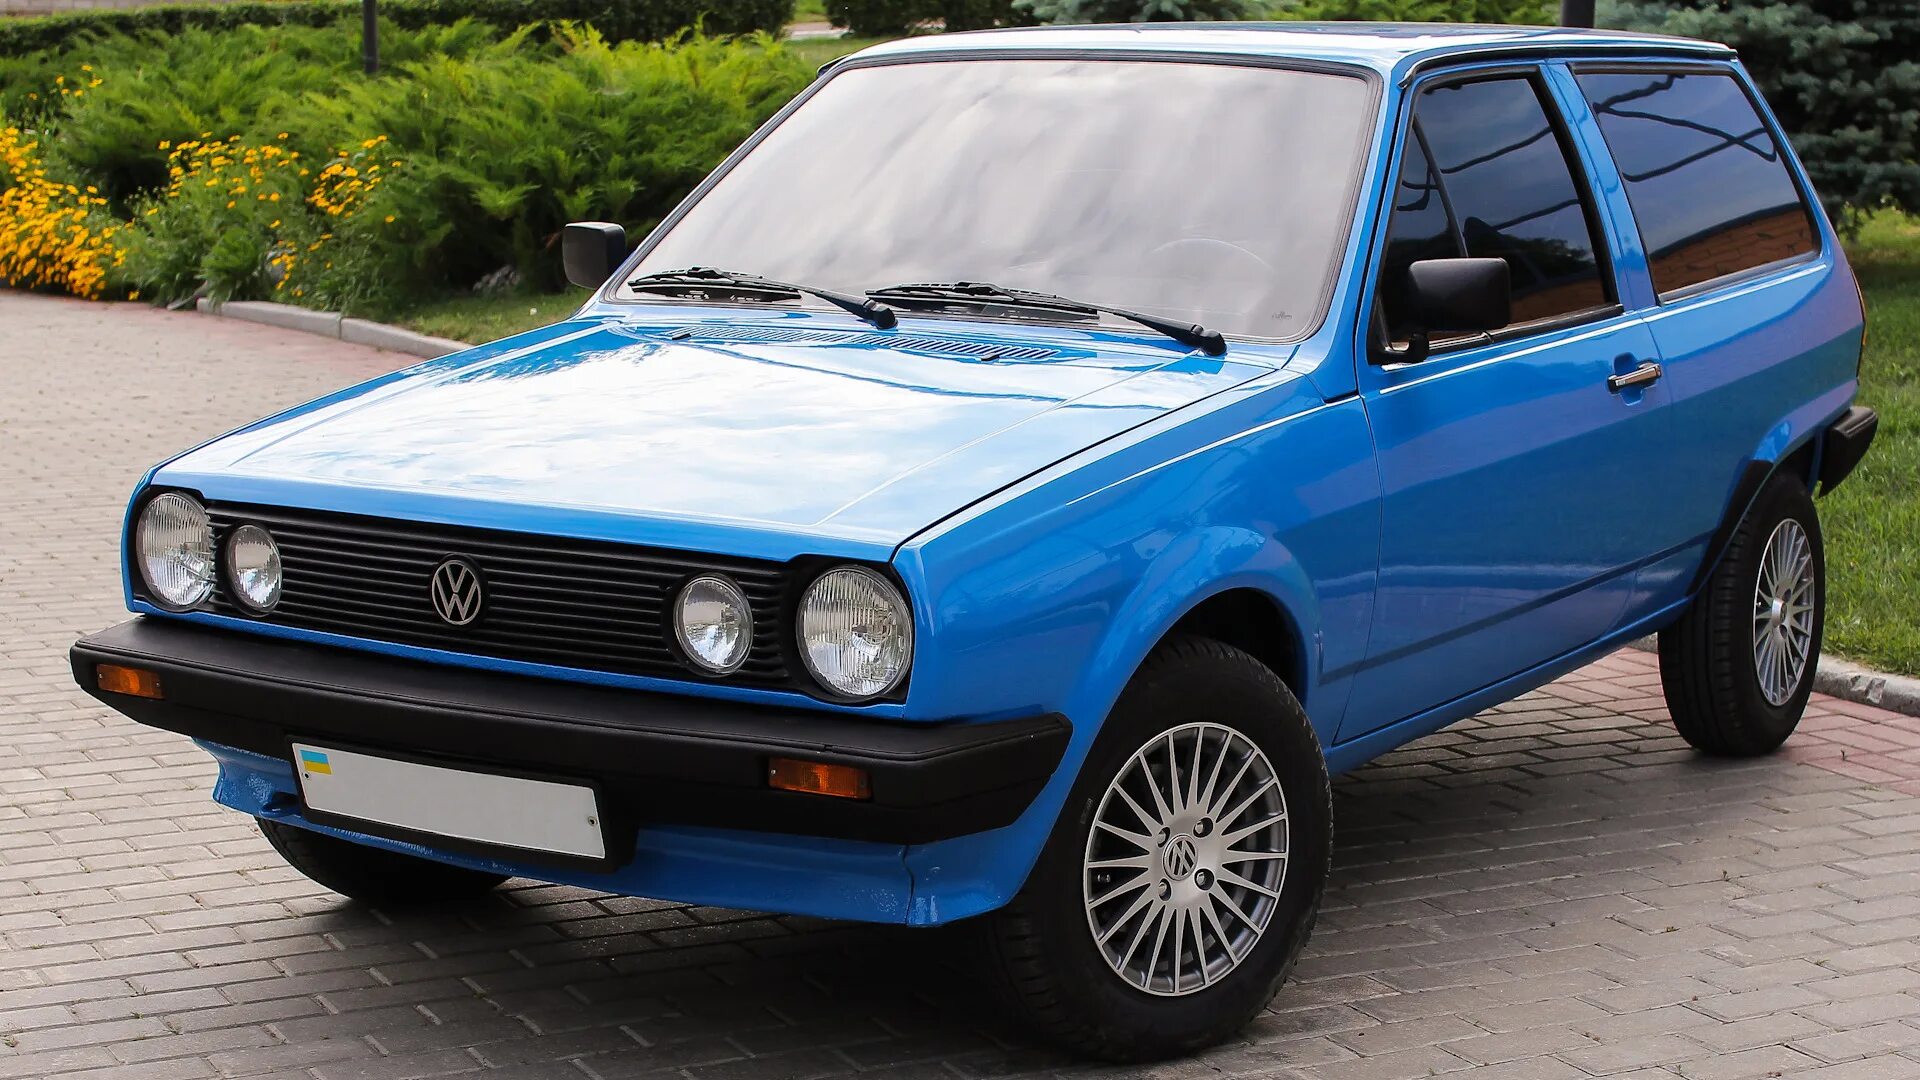 VW Polo mk2. Volkswagen Polo 2 поколения. Фольксваген поло 1982. WV Polo 2 Coupe. Поло 1 поколение